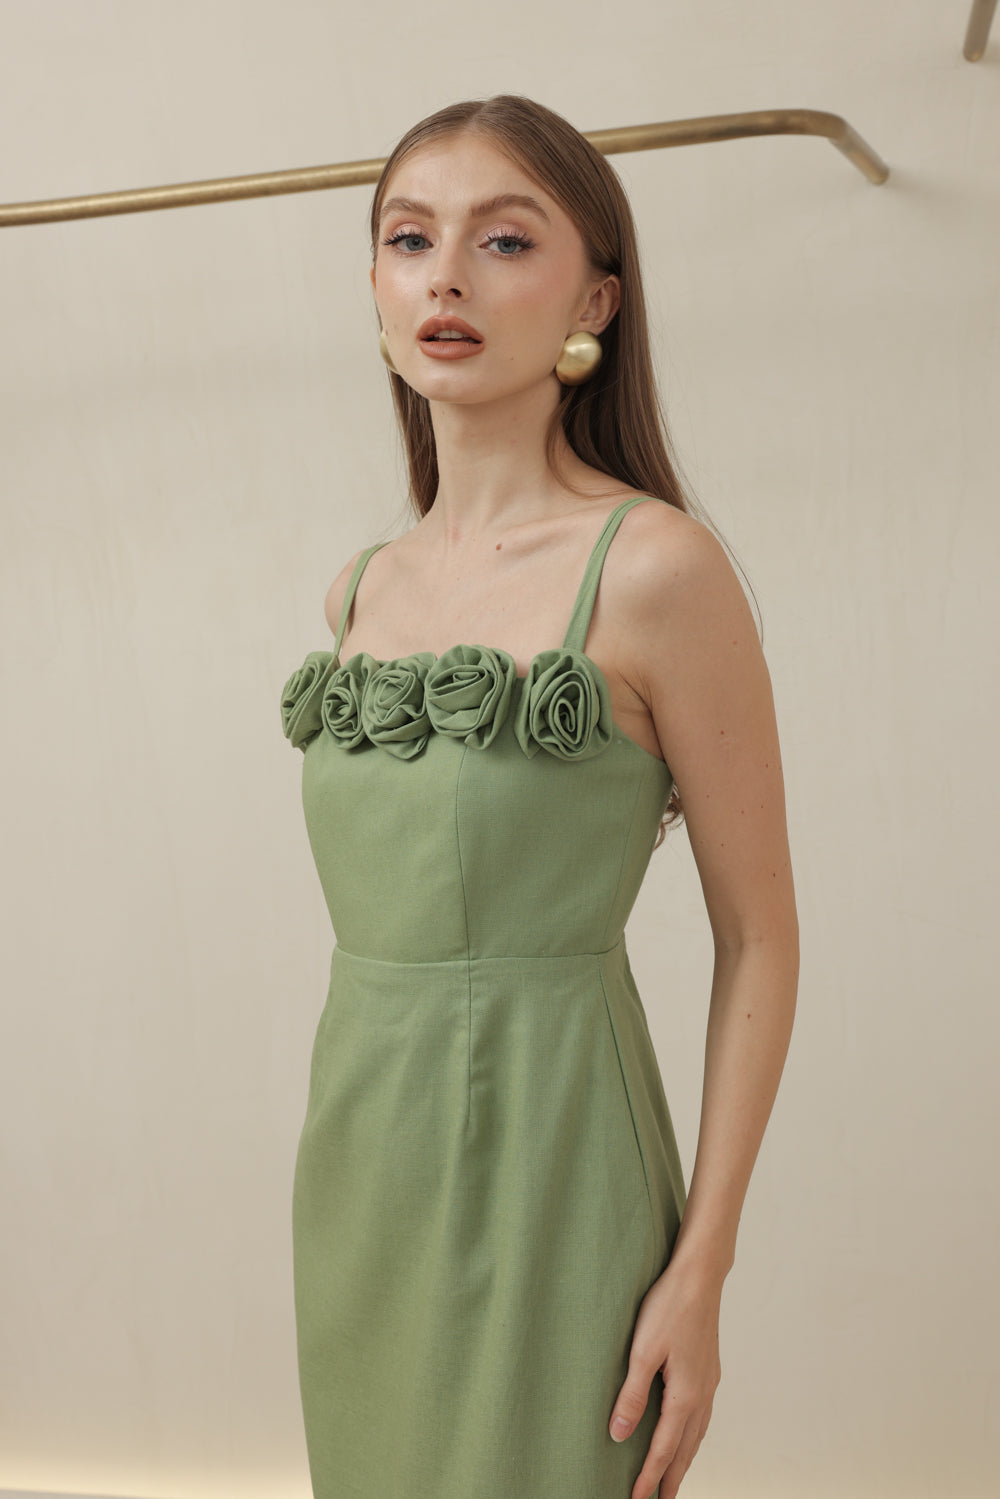 MONET DRESS Straight Neckline Strappy Midi Pencil Skirt Dress with Floral Details (Avocado Green Linen)